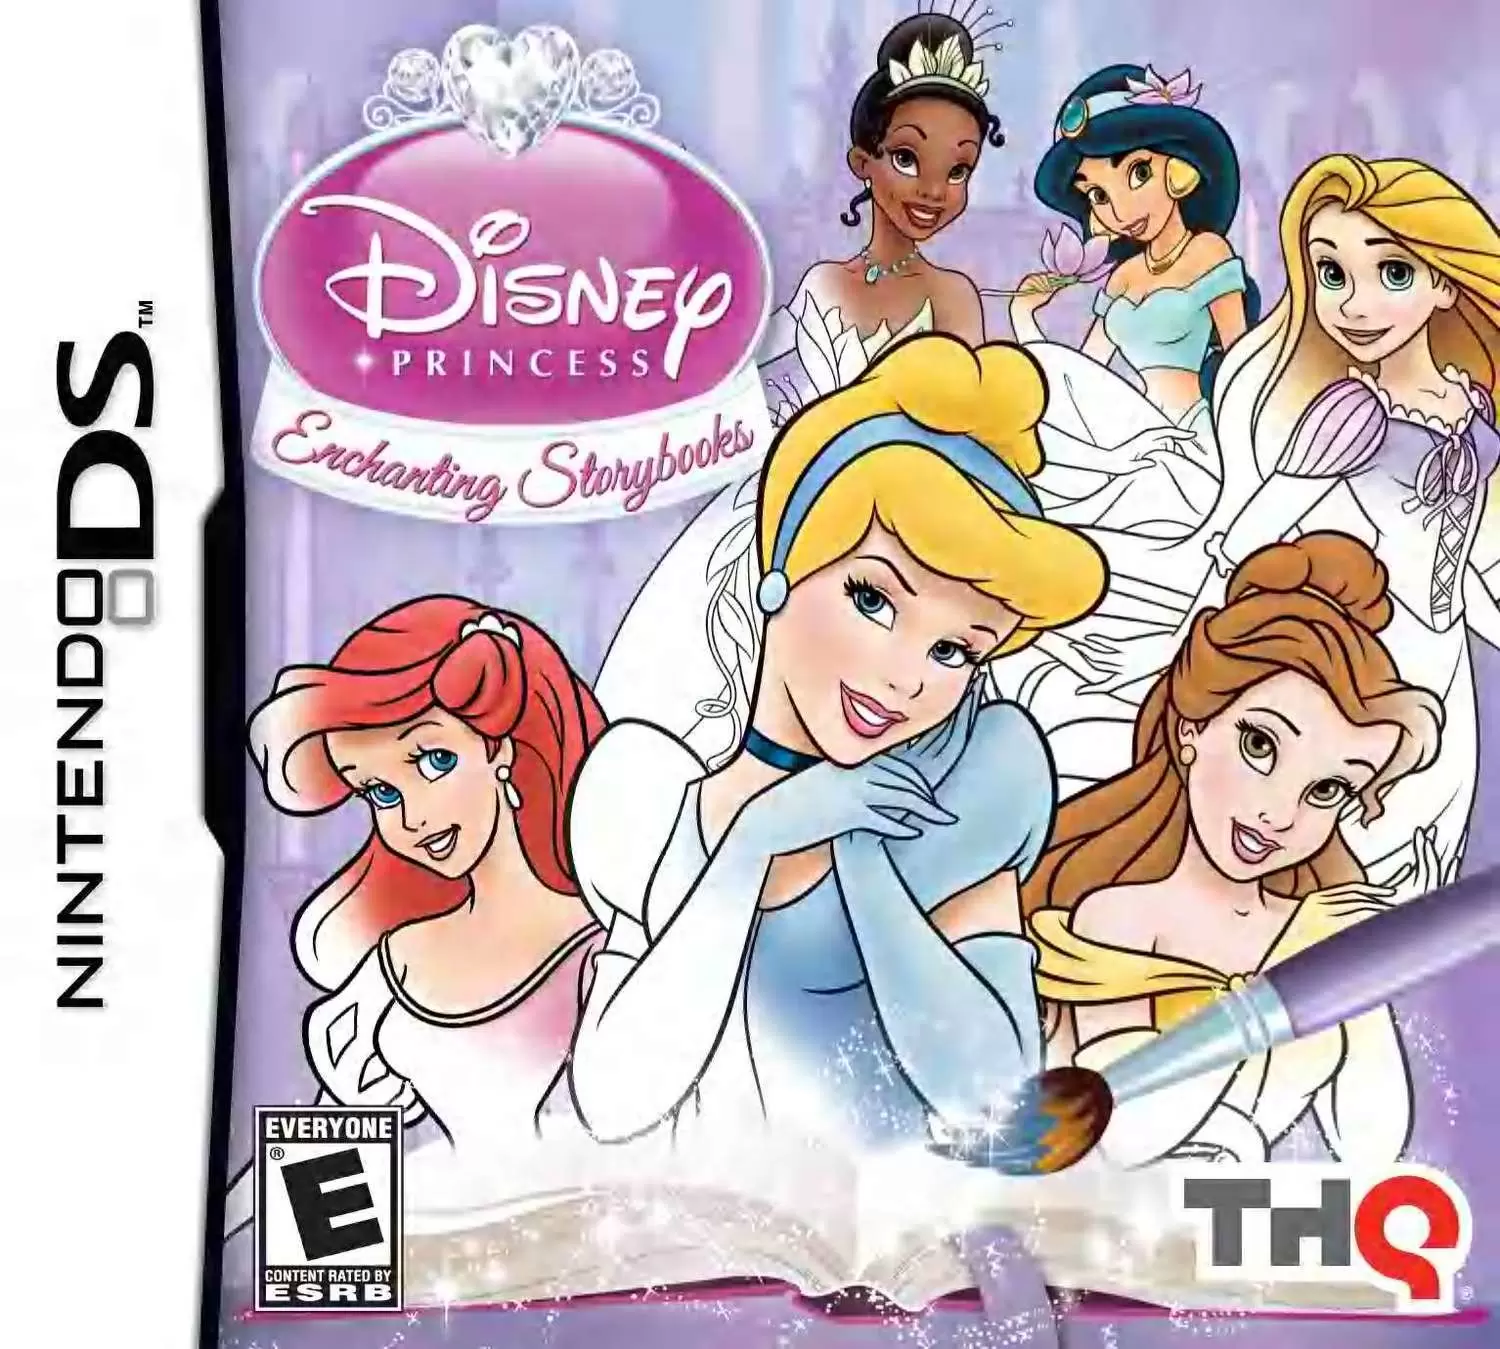 Nintendo DS Games - Disney Princess: Enchanting Storybooks